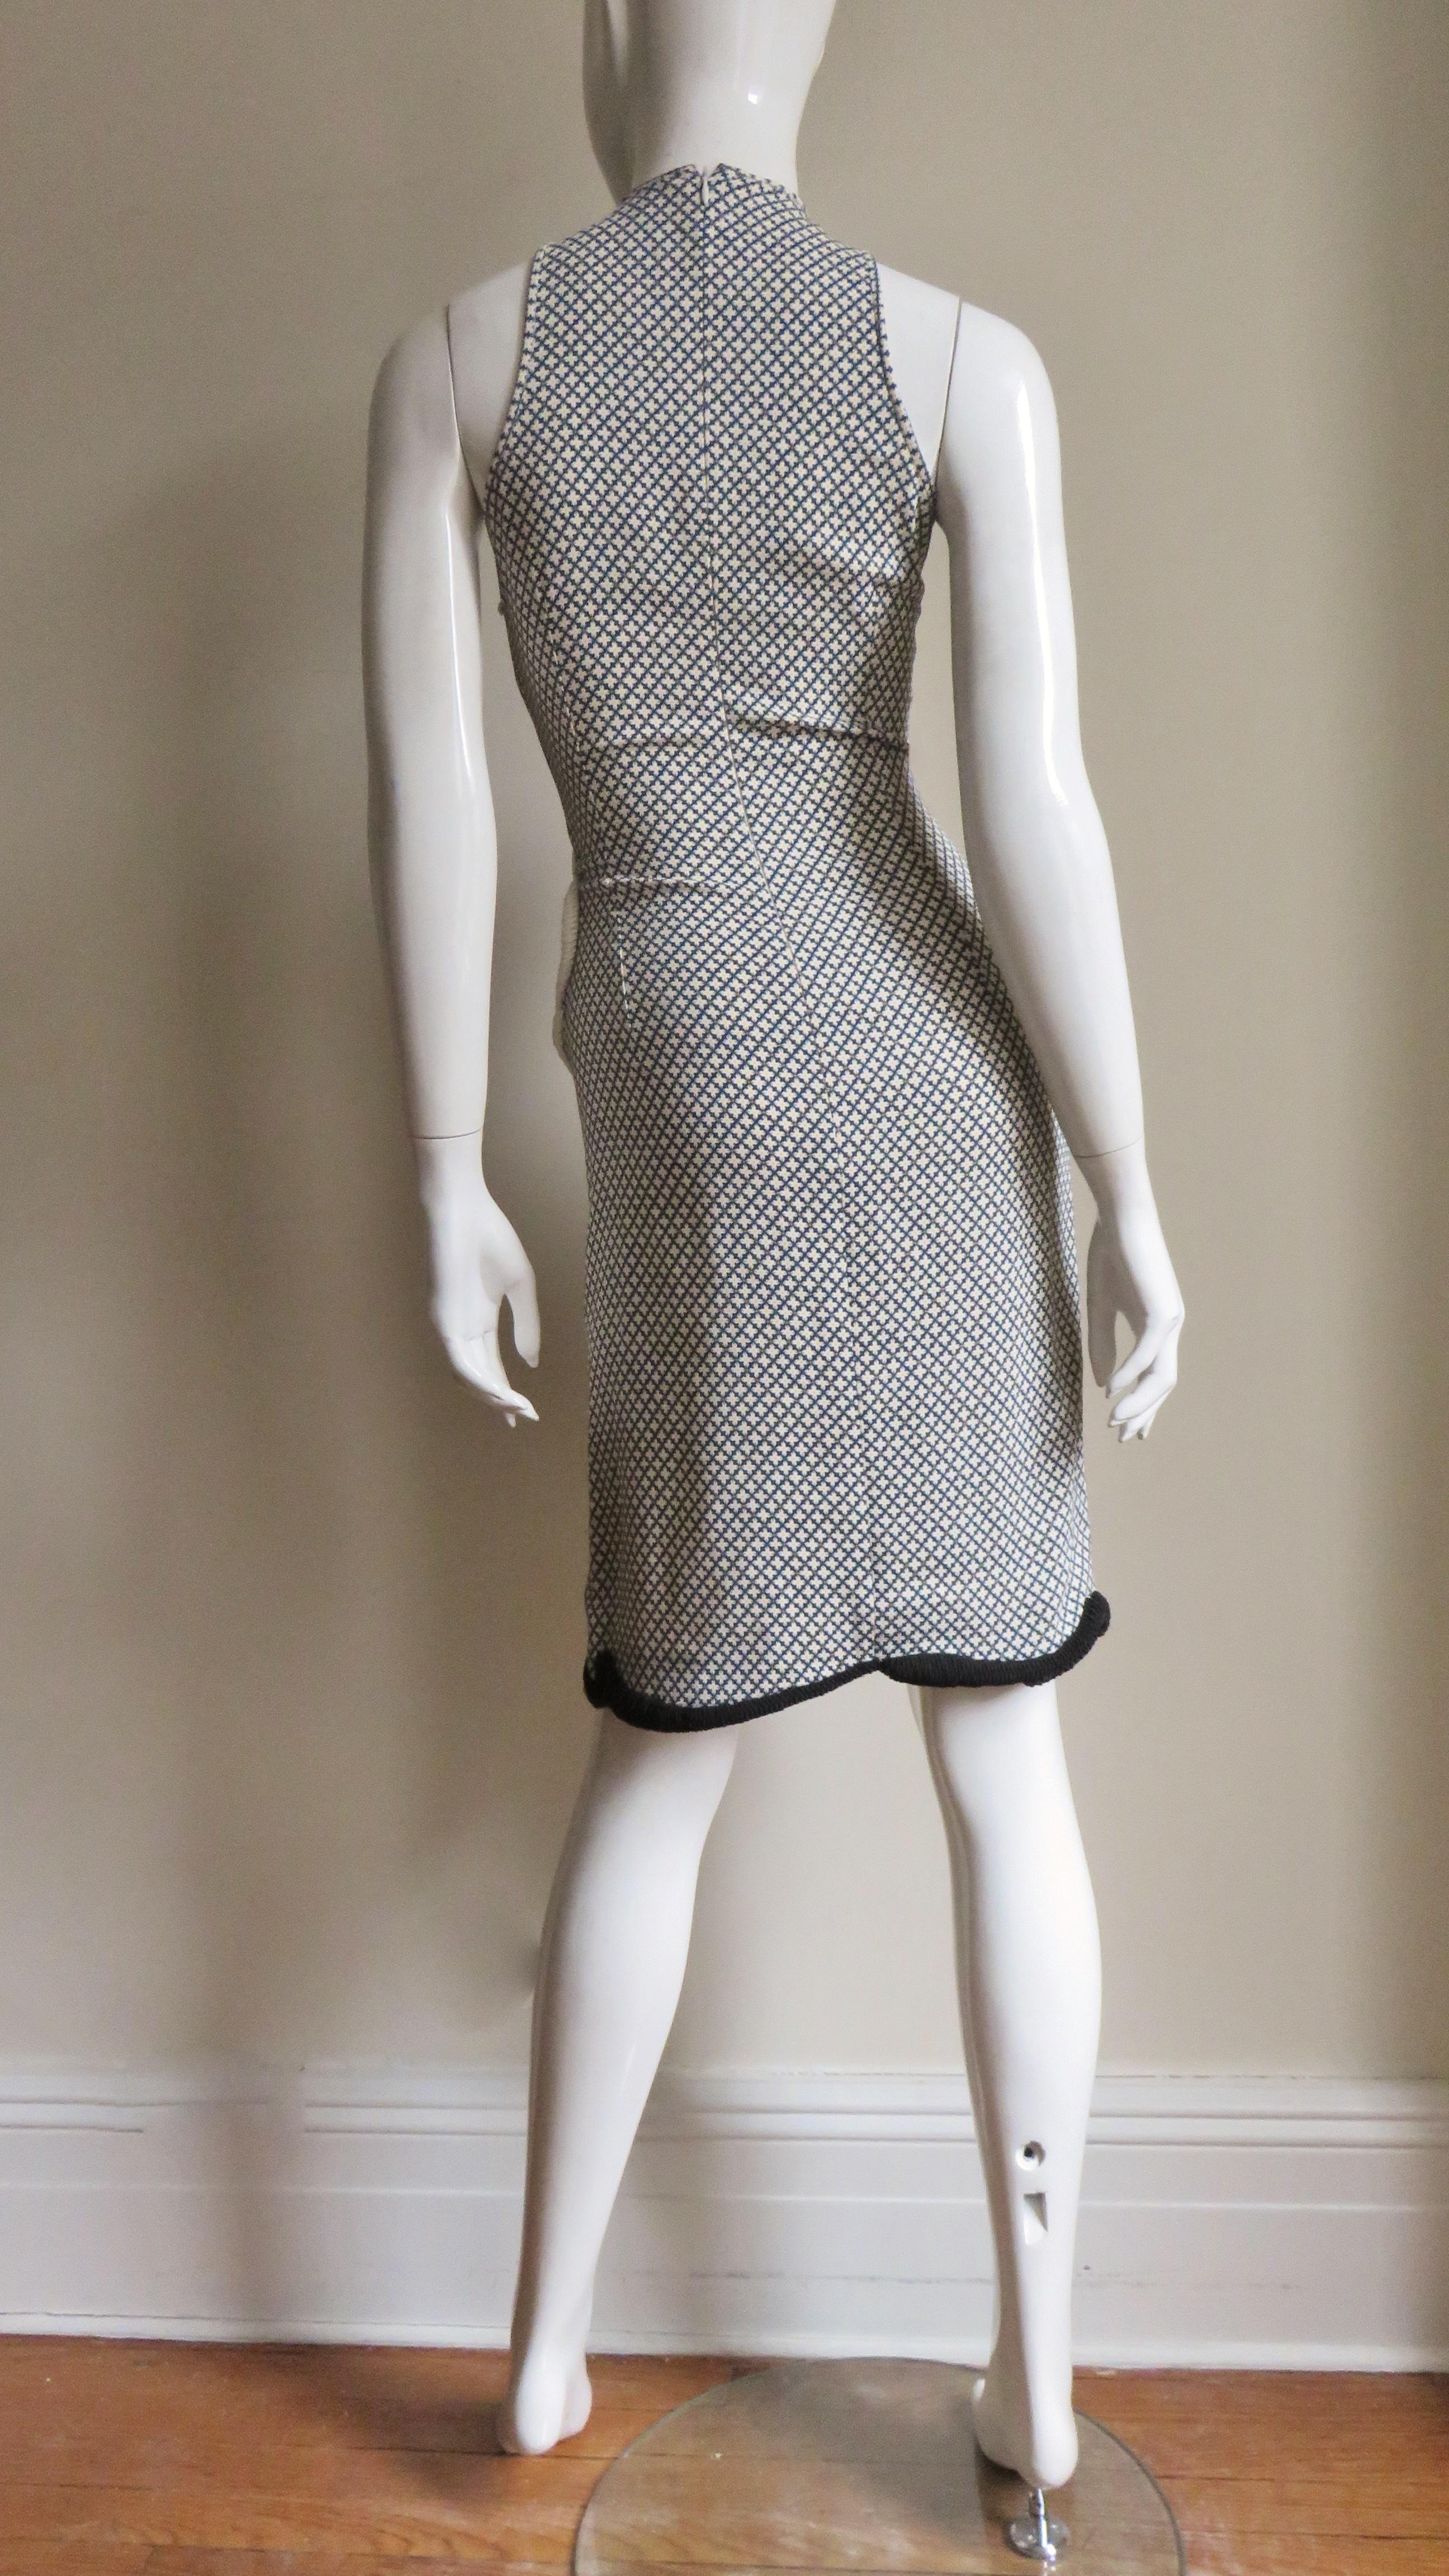 Stella McCartney New Mixed Pattern Ad Campaign Cut out Dress 9